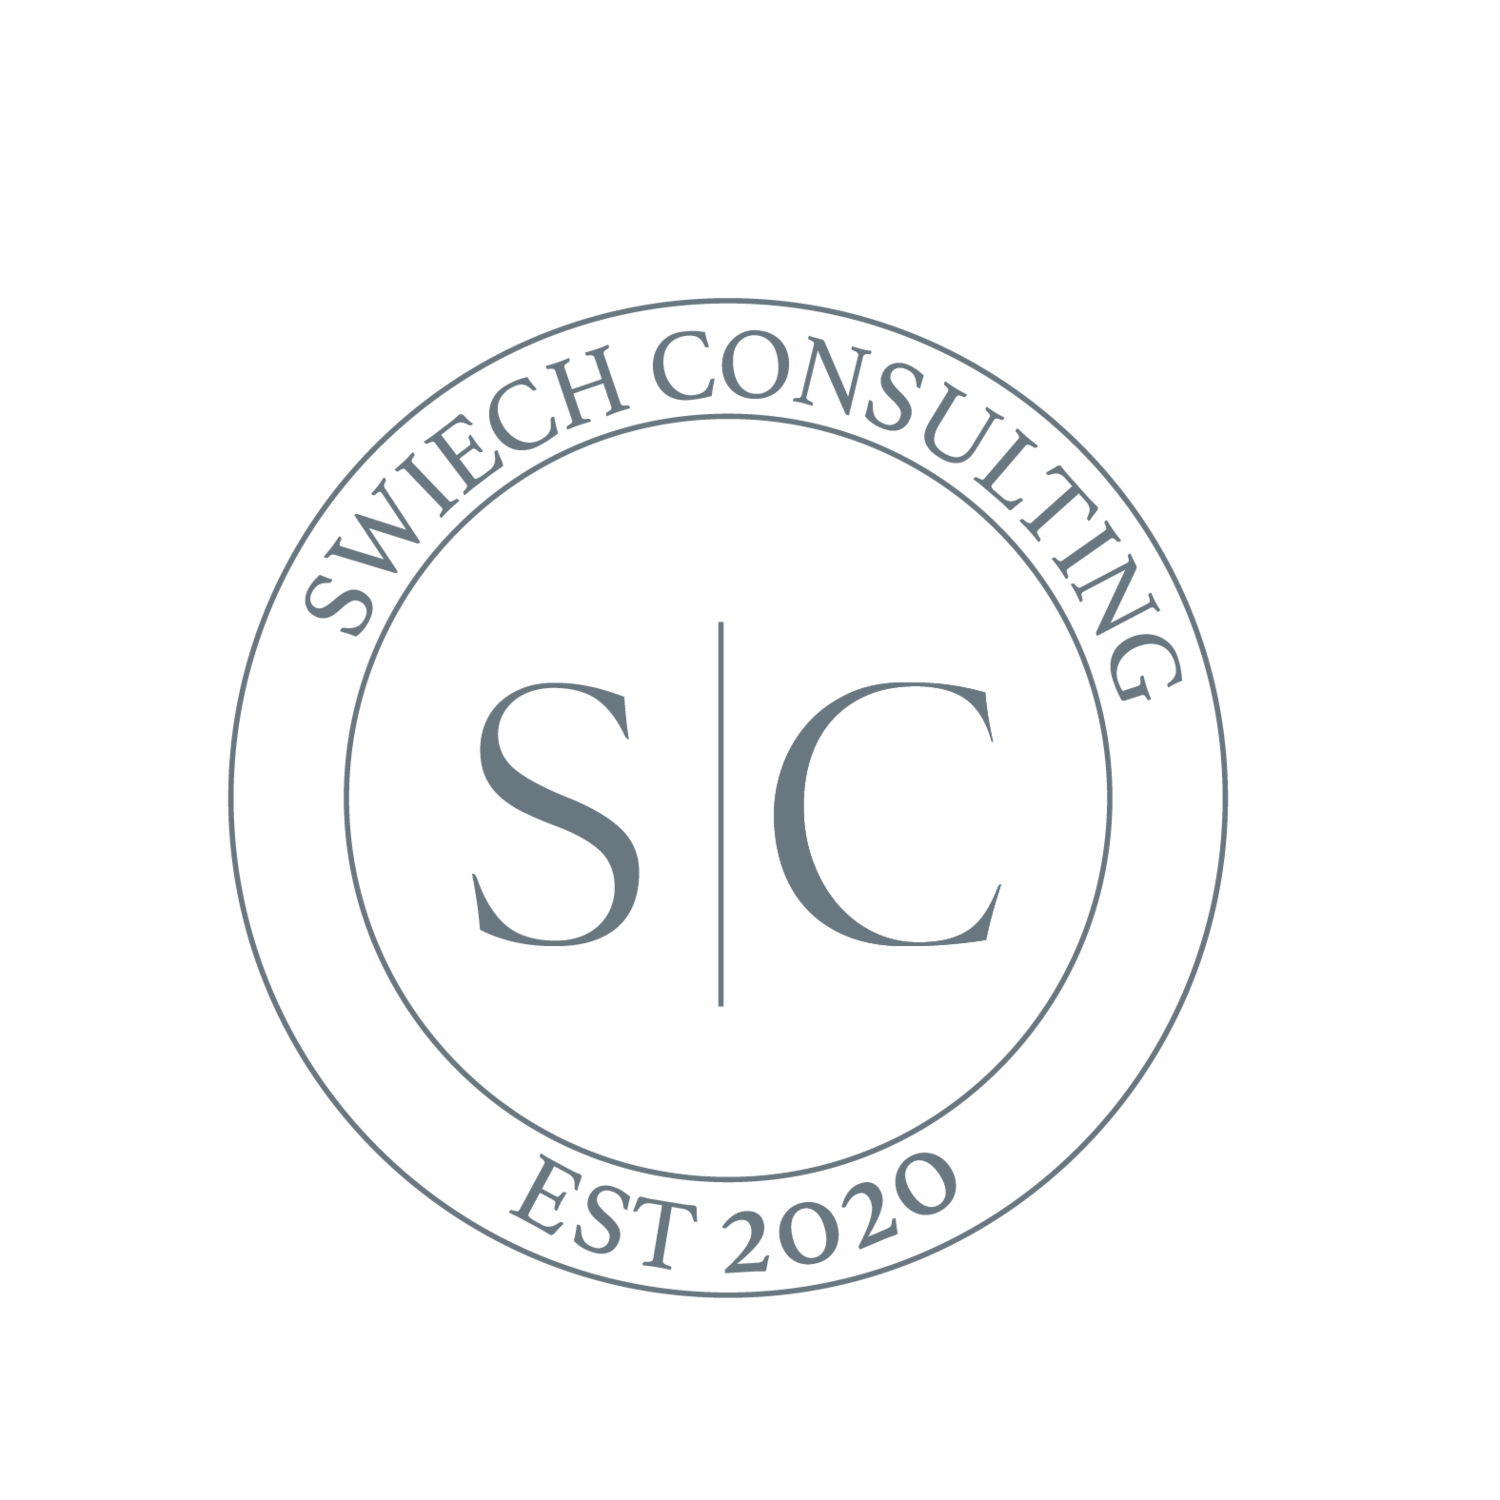 Swiech HR Consulting